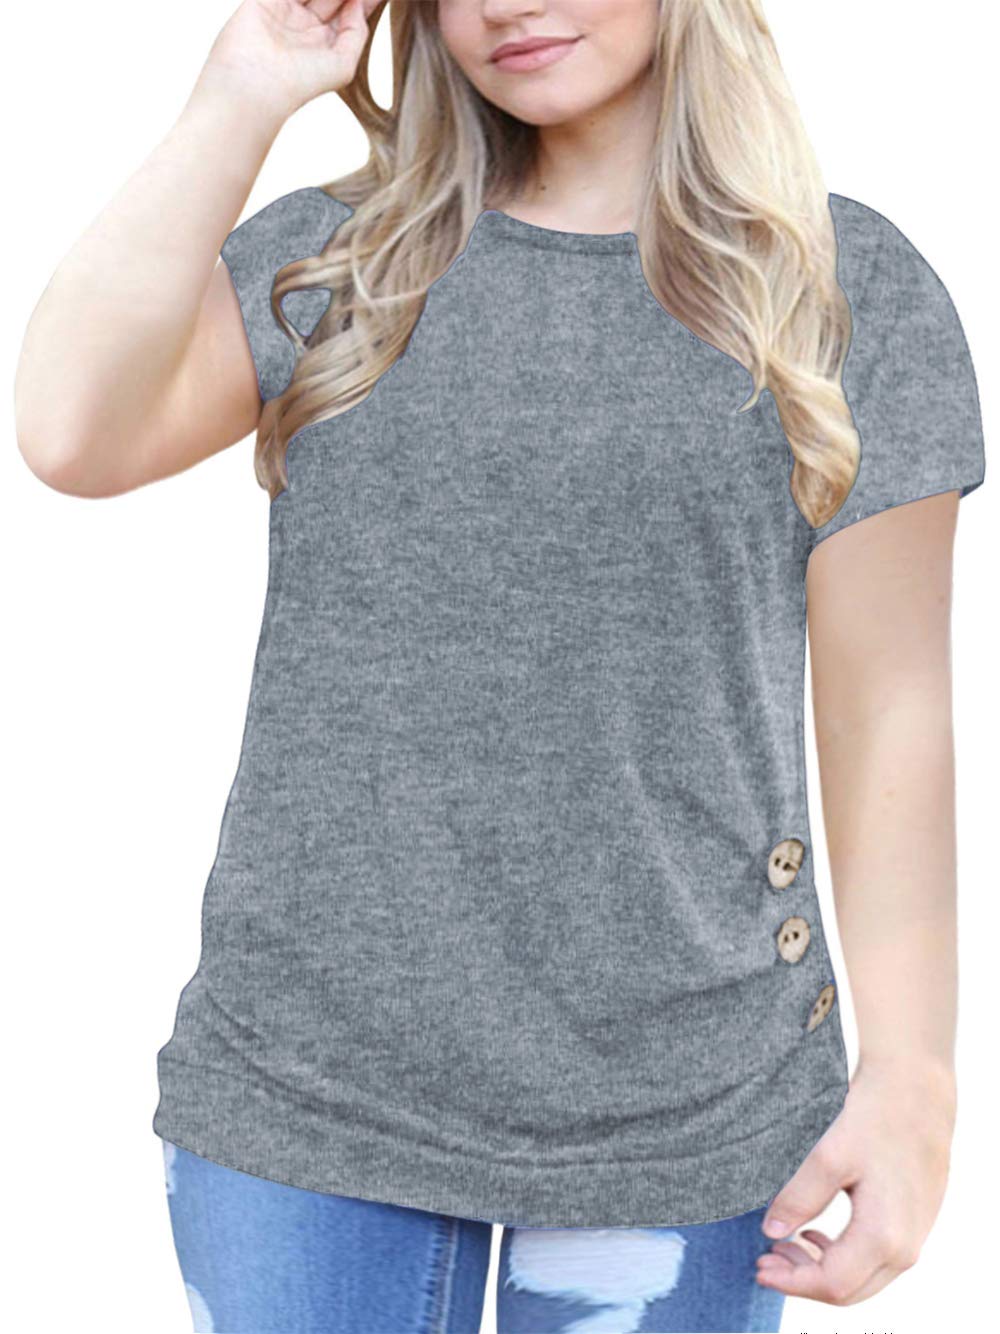 VISLILY Womens Plus Size Tops Buttons Decor T Shirt Short Sleeve